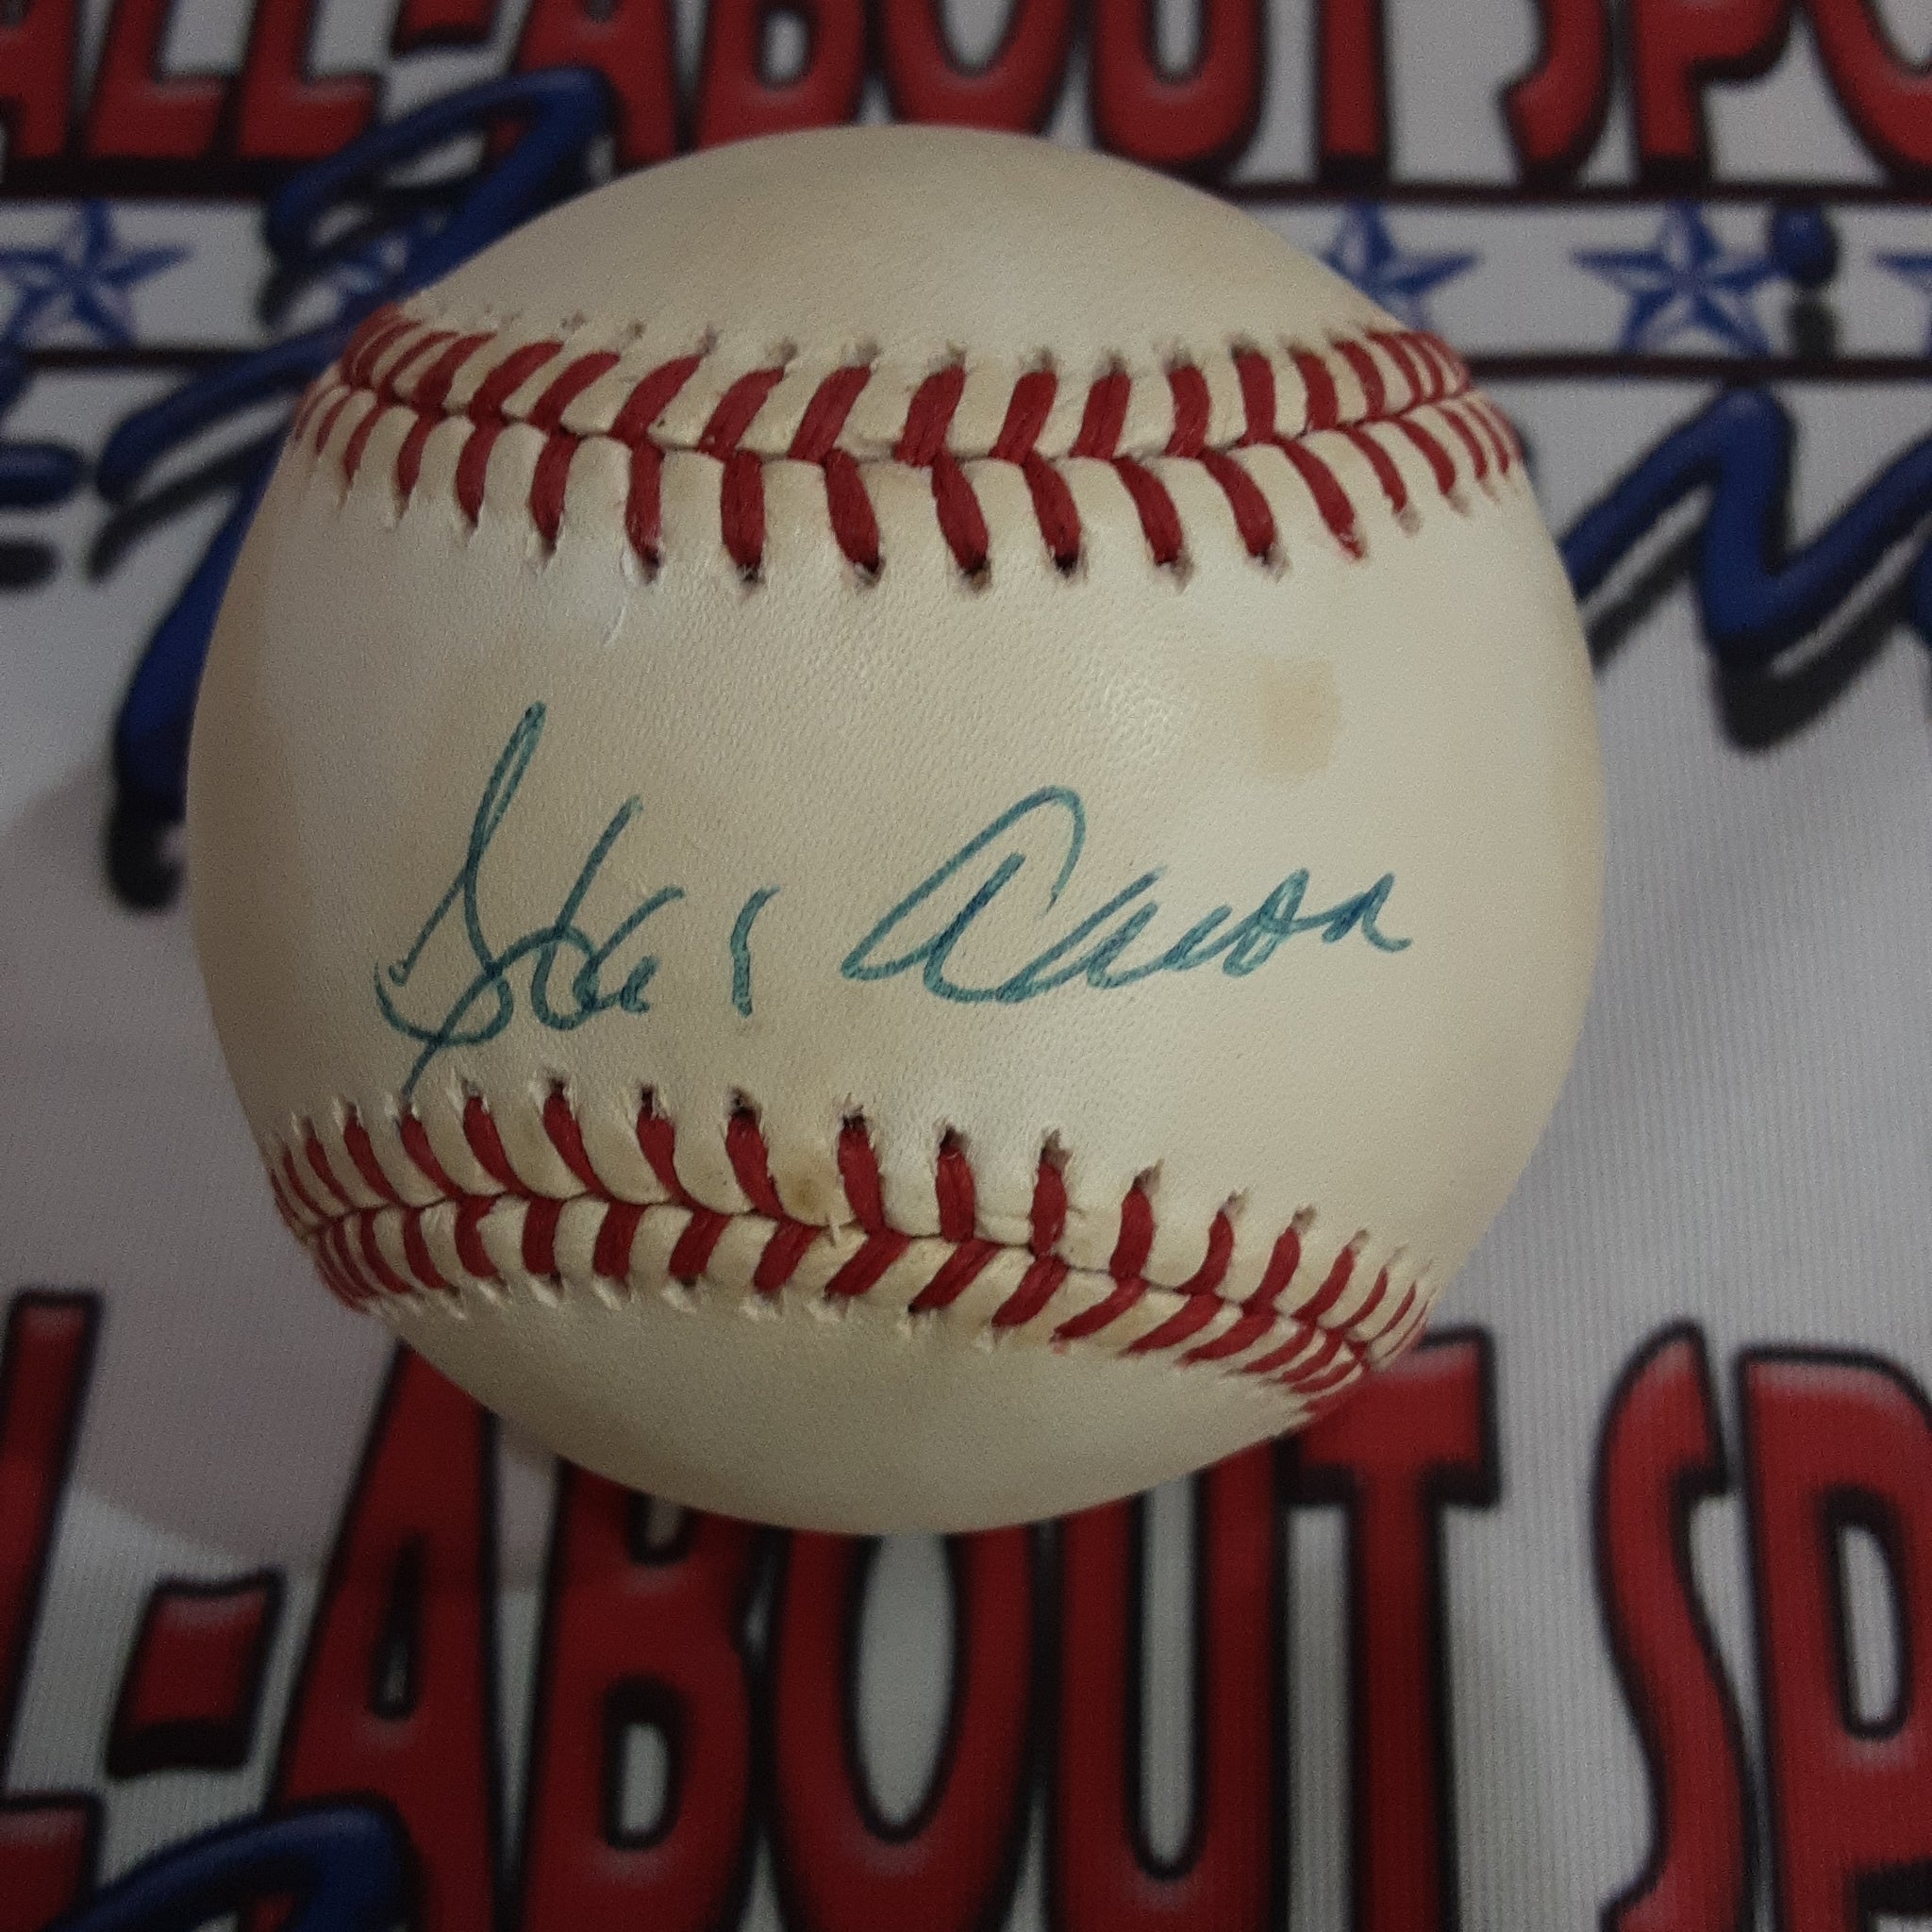 Joe DiMaggio Authentic Signed Rawlings Baseball Autographed JSA/LOA.